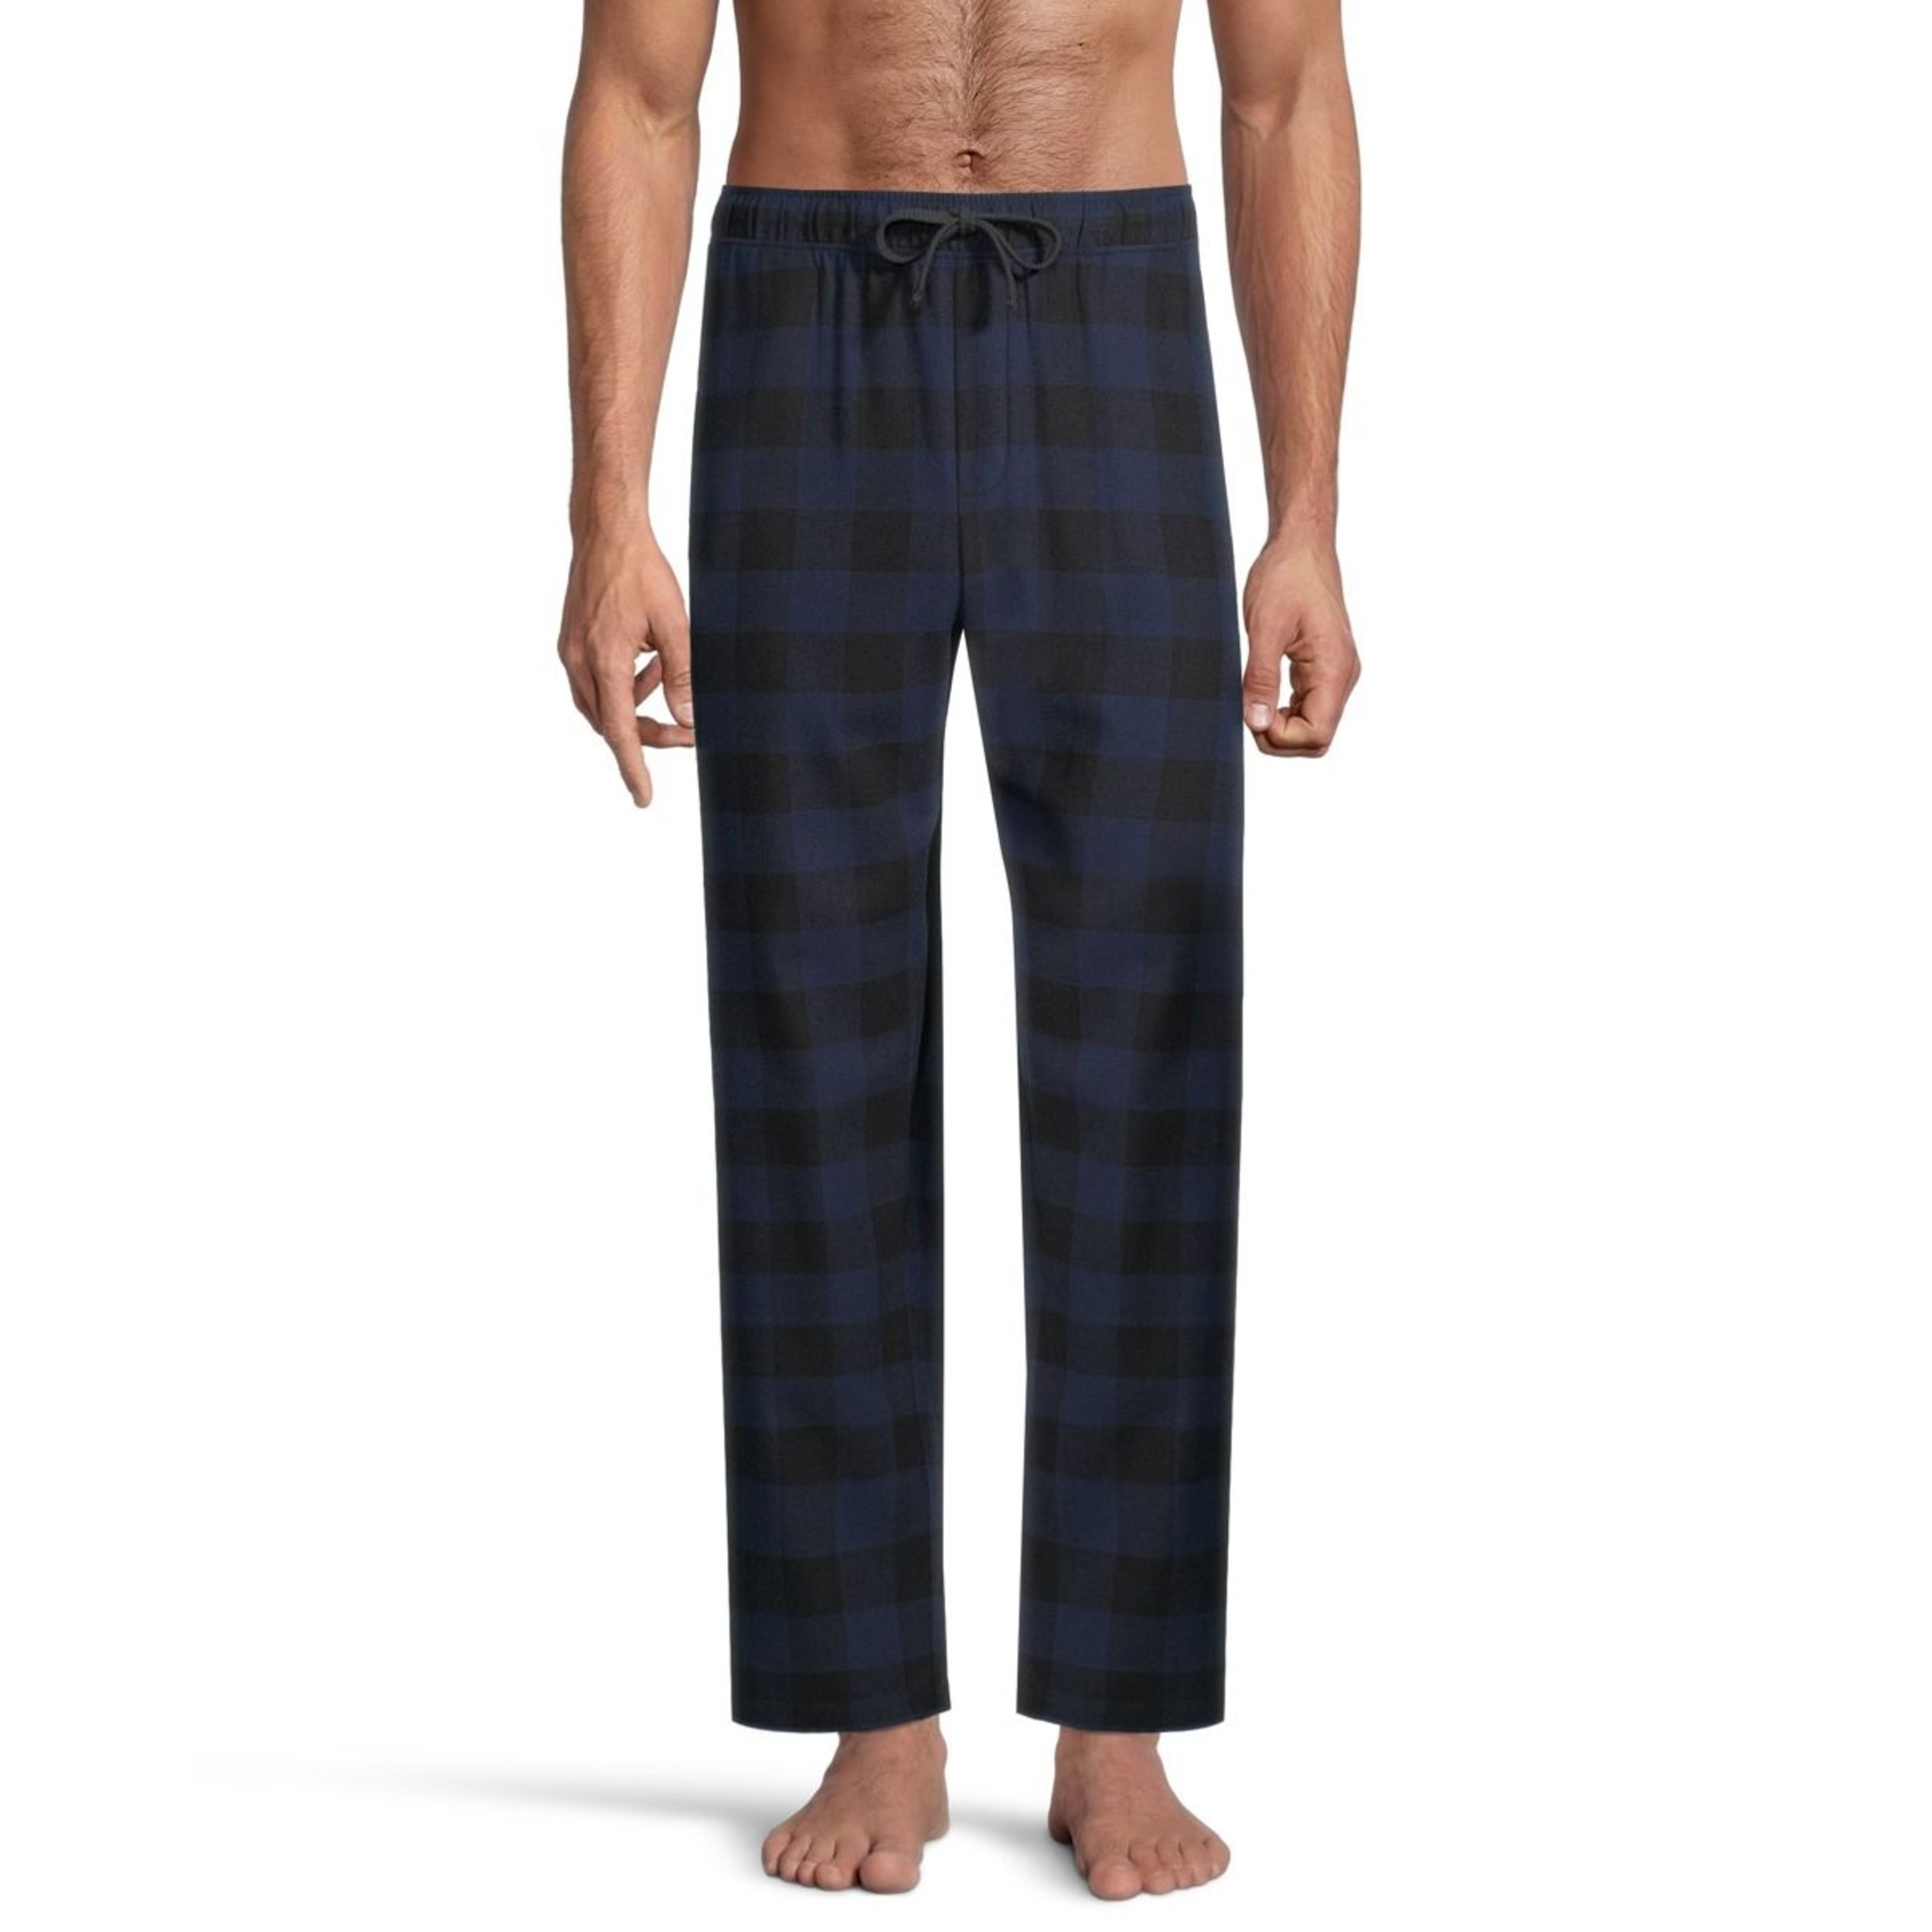 Ripzone Men's Tanegar Flannel Lounge Pants | SportChek